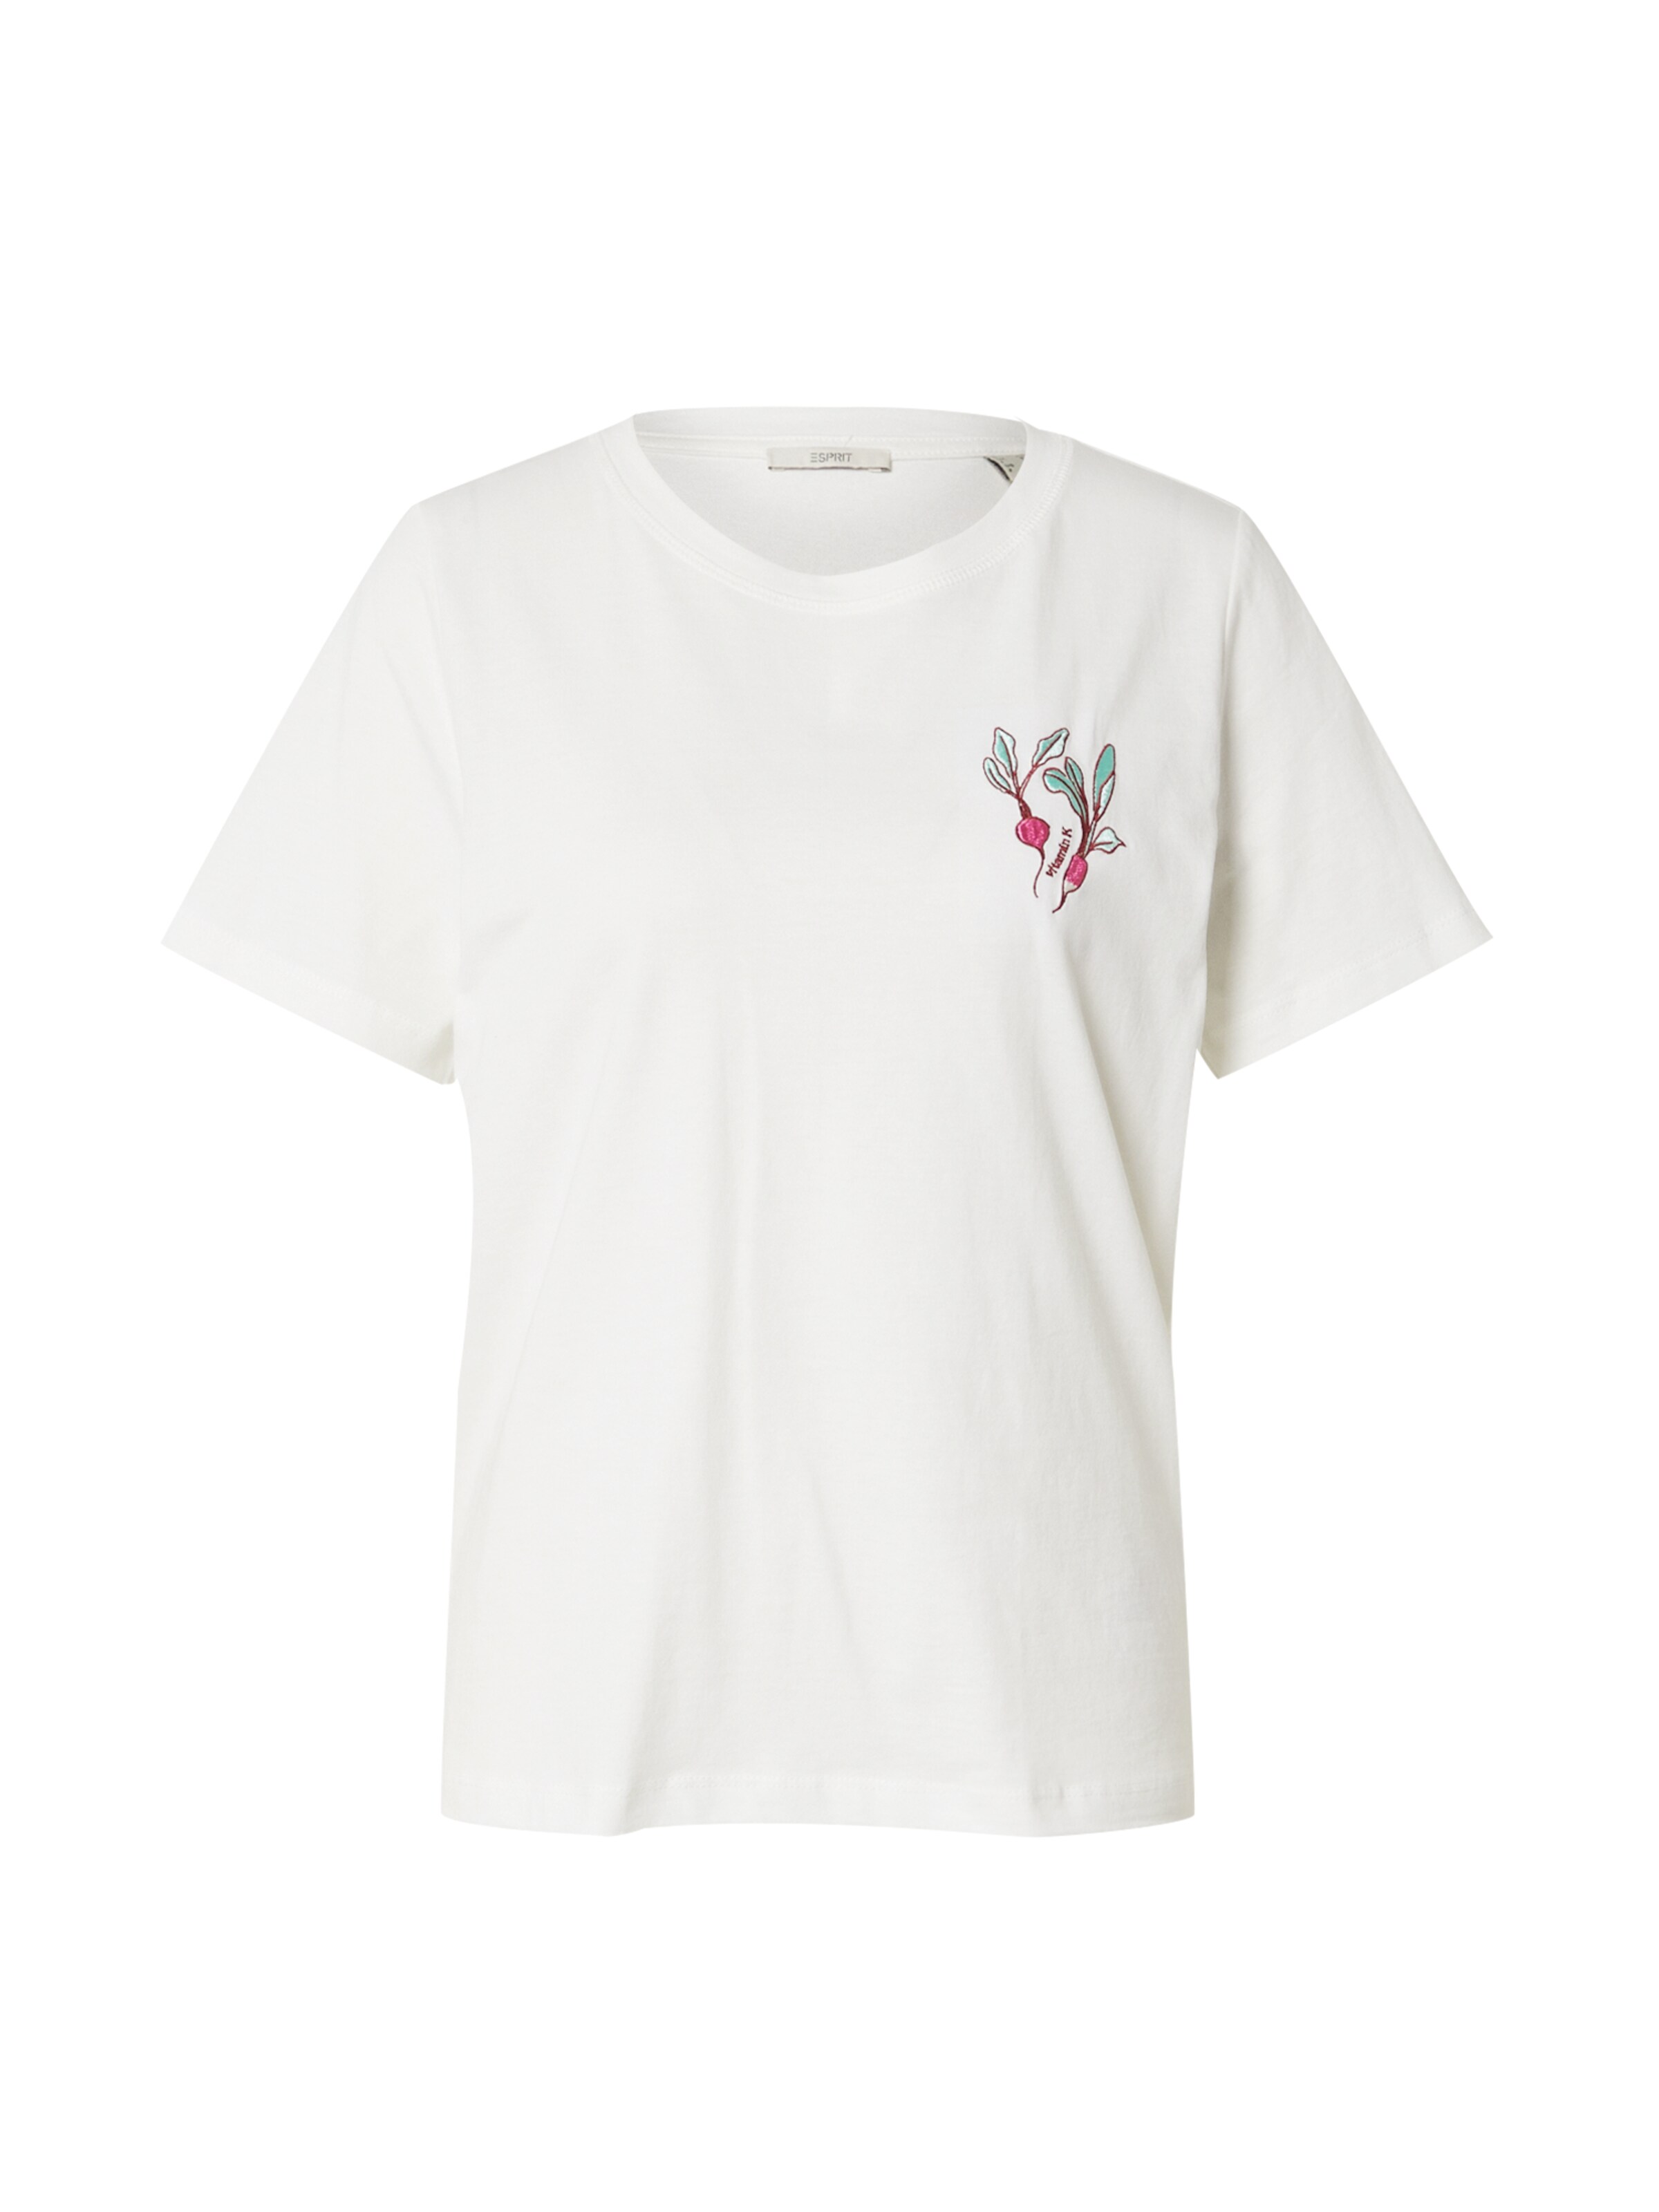 T-shirt in jersey di cotone con logo Mytheresa Donna Abbigliamento Top e t-shirt T-shirt T-shirt a maniche corte 